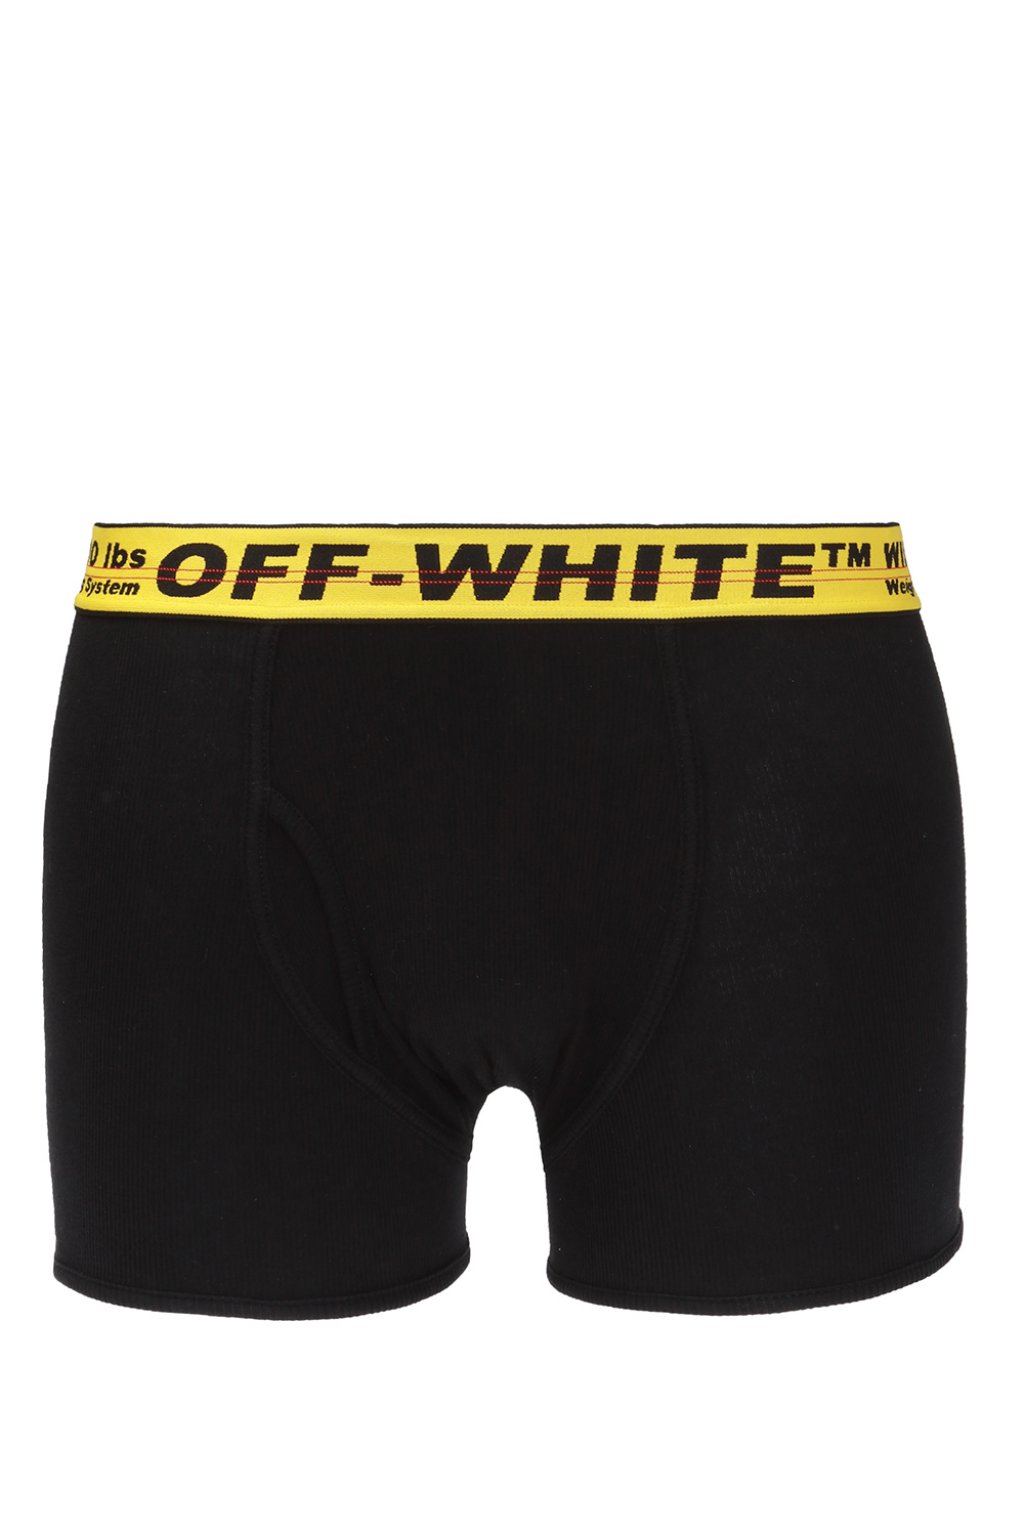 Off-White Men's Boxers